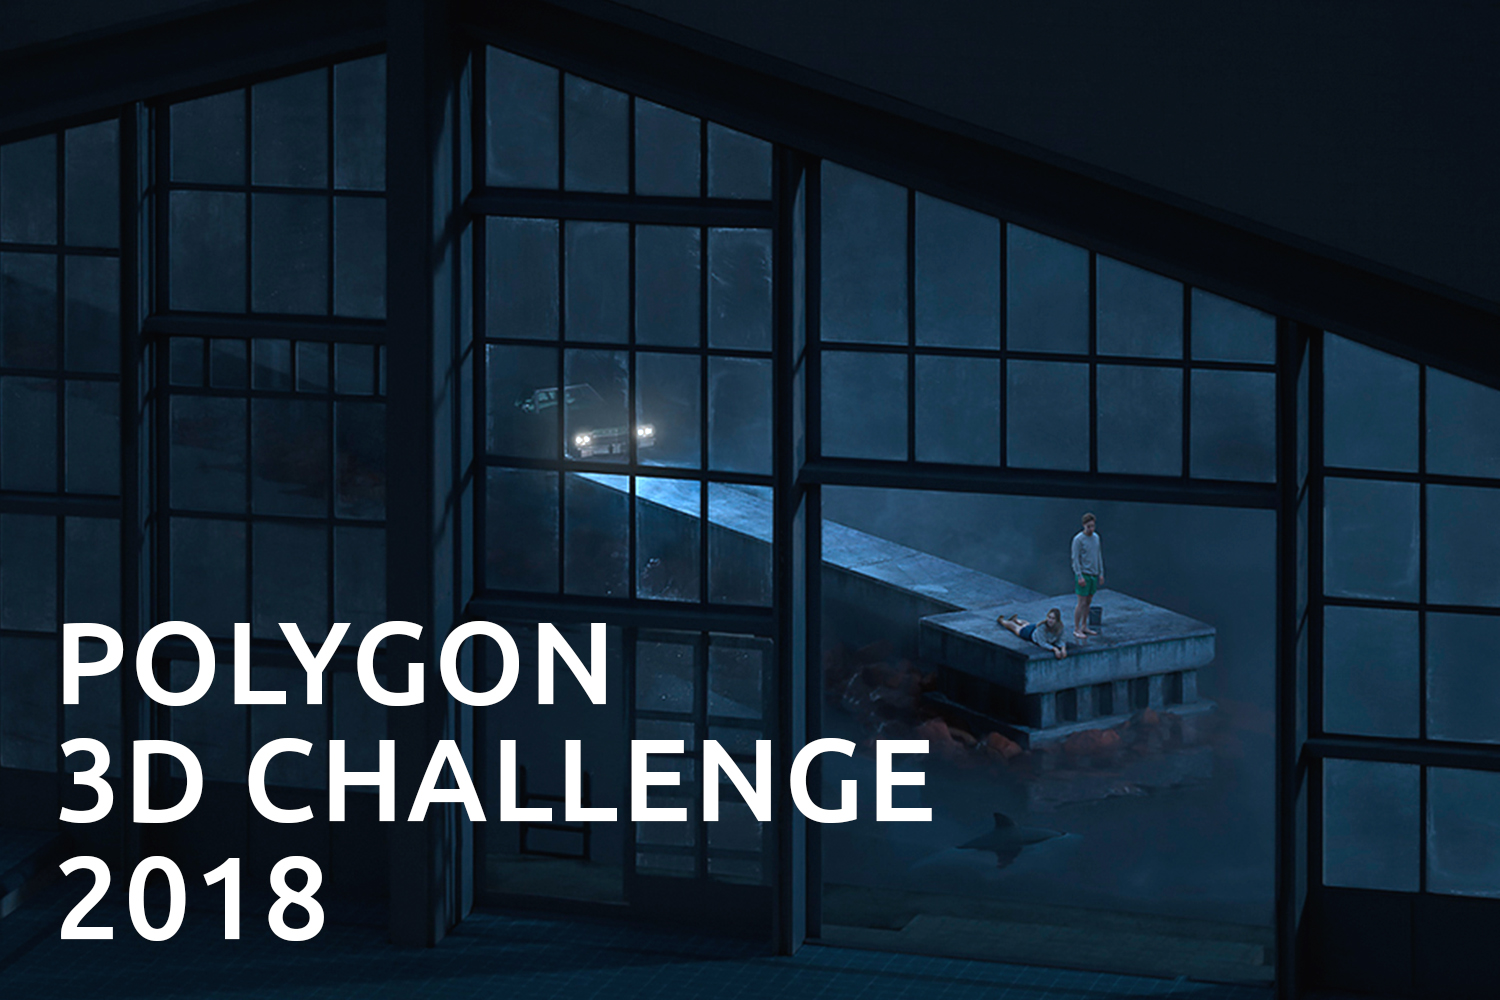 Polygon 3D Challenge 2018